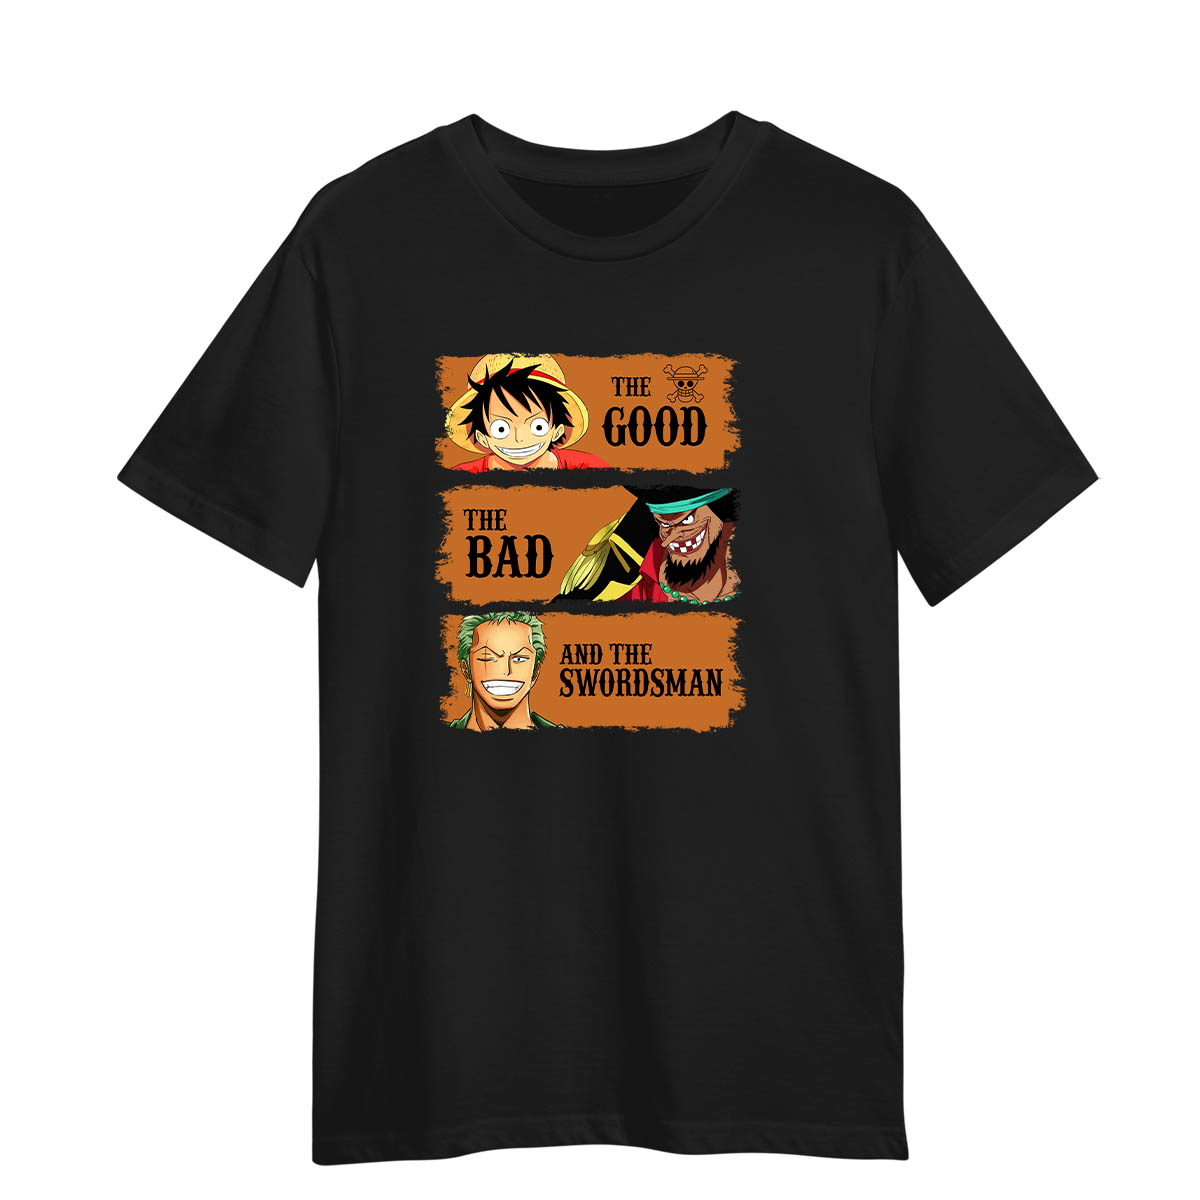  Zoro Luffy Marshall D Teach One Piece Adult Unisex Black T-shirt